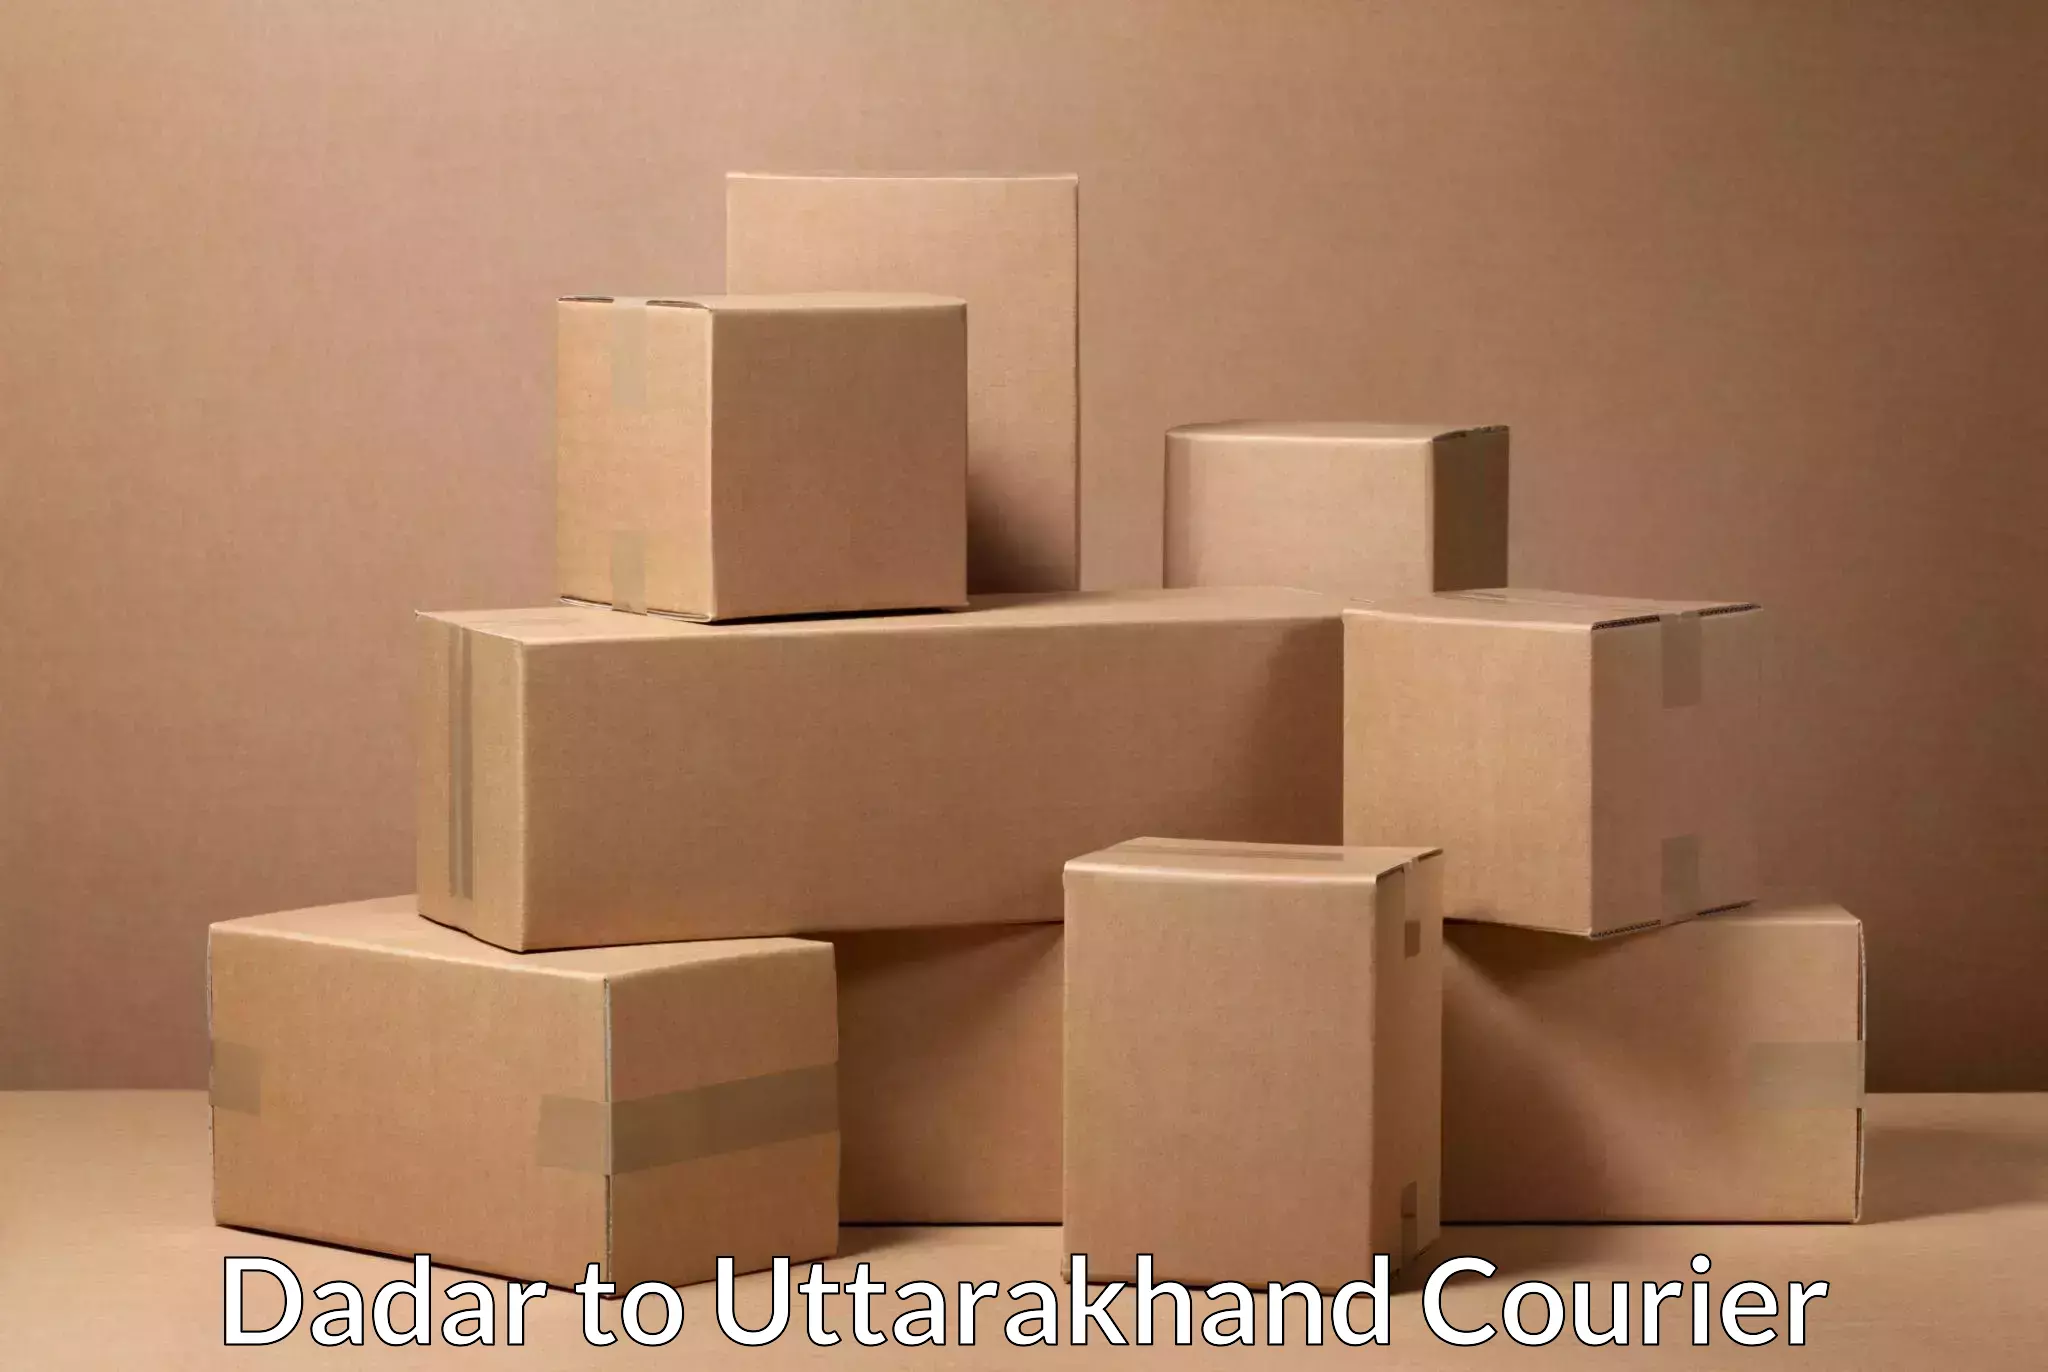 Ground shipping in Dadar to Uttarakhand